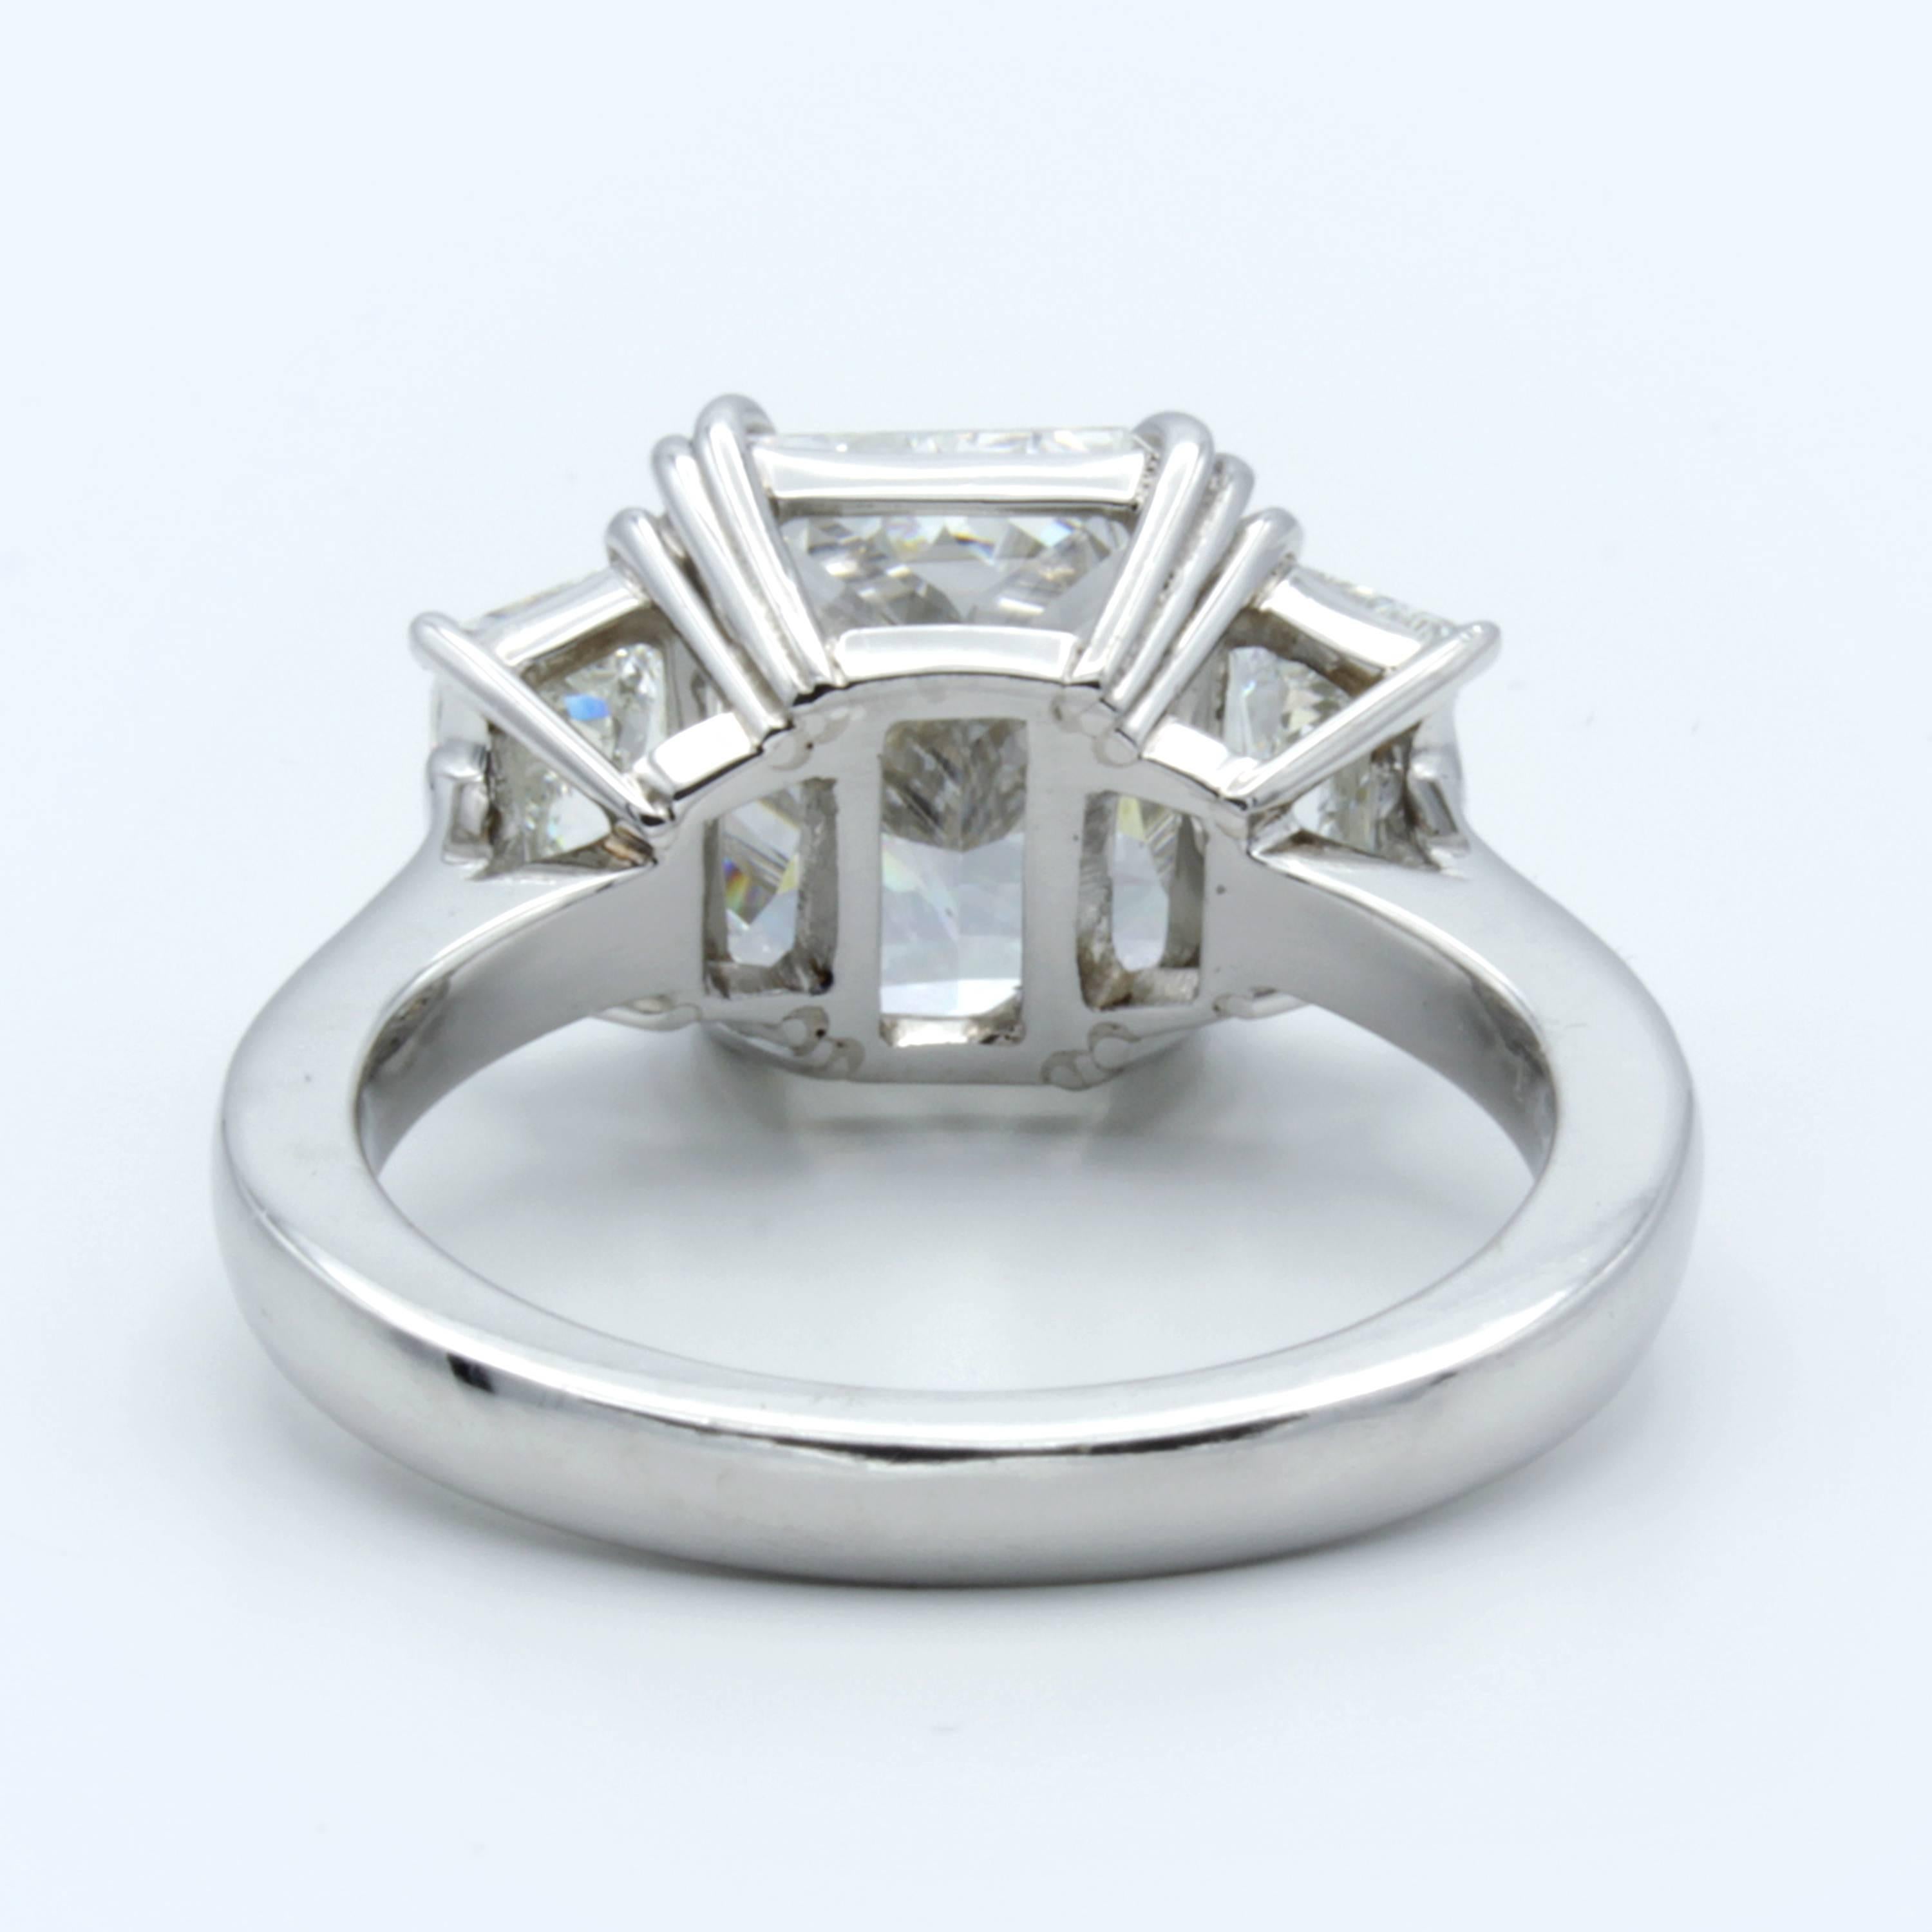 David Rosenberg 4.34 Carat Radiant Cut GIA Certified G/VS Platinum Diamond Ring 1